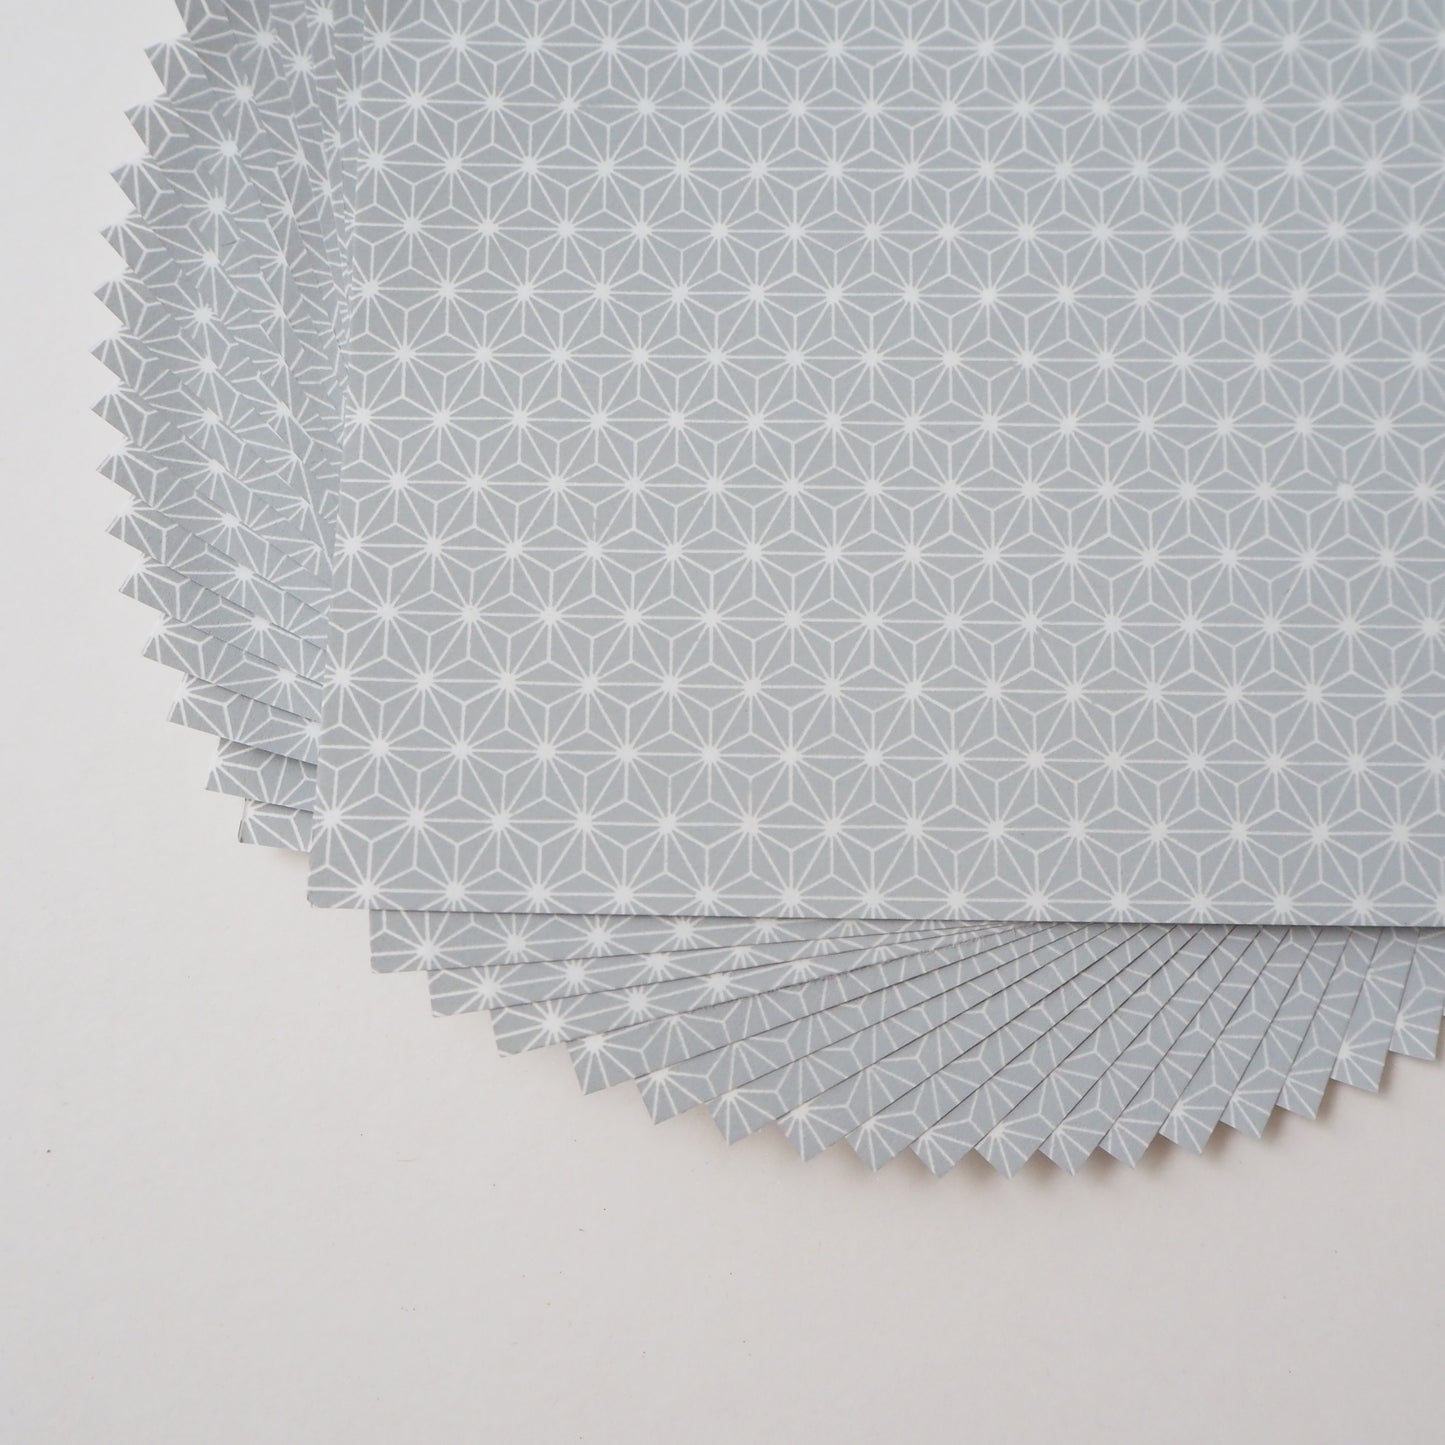 Pack of 20 Sheets 14x14cm Yuzen Washi Origami Paper HZ-415 - Grey Hemp Leaf